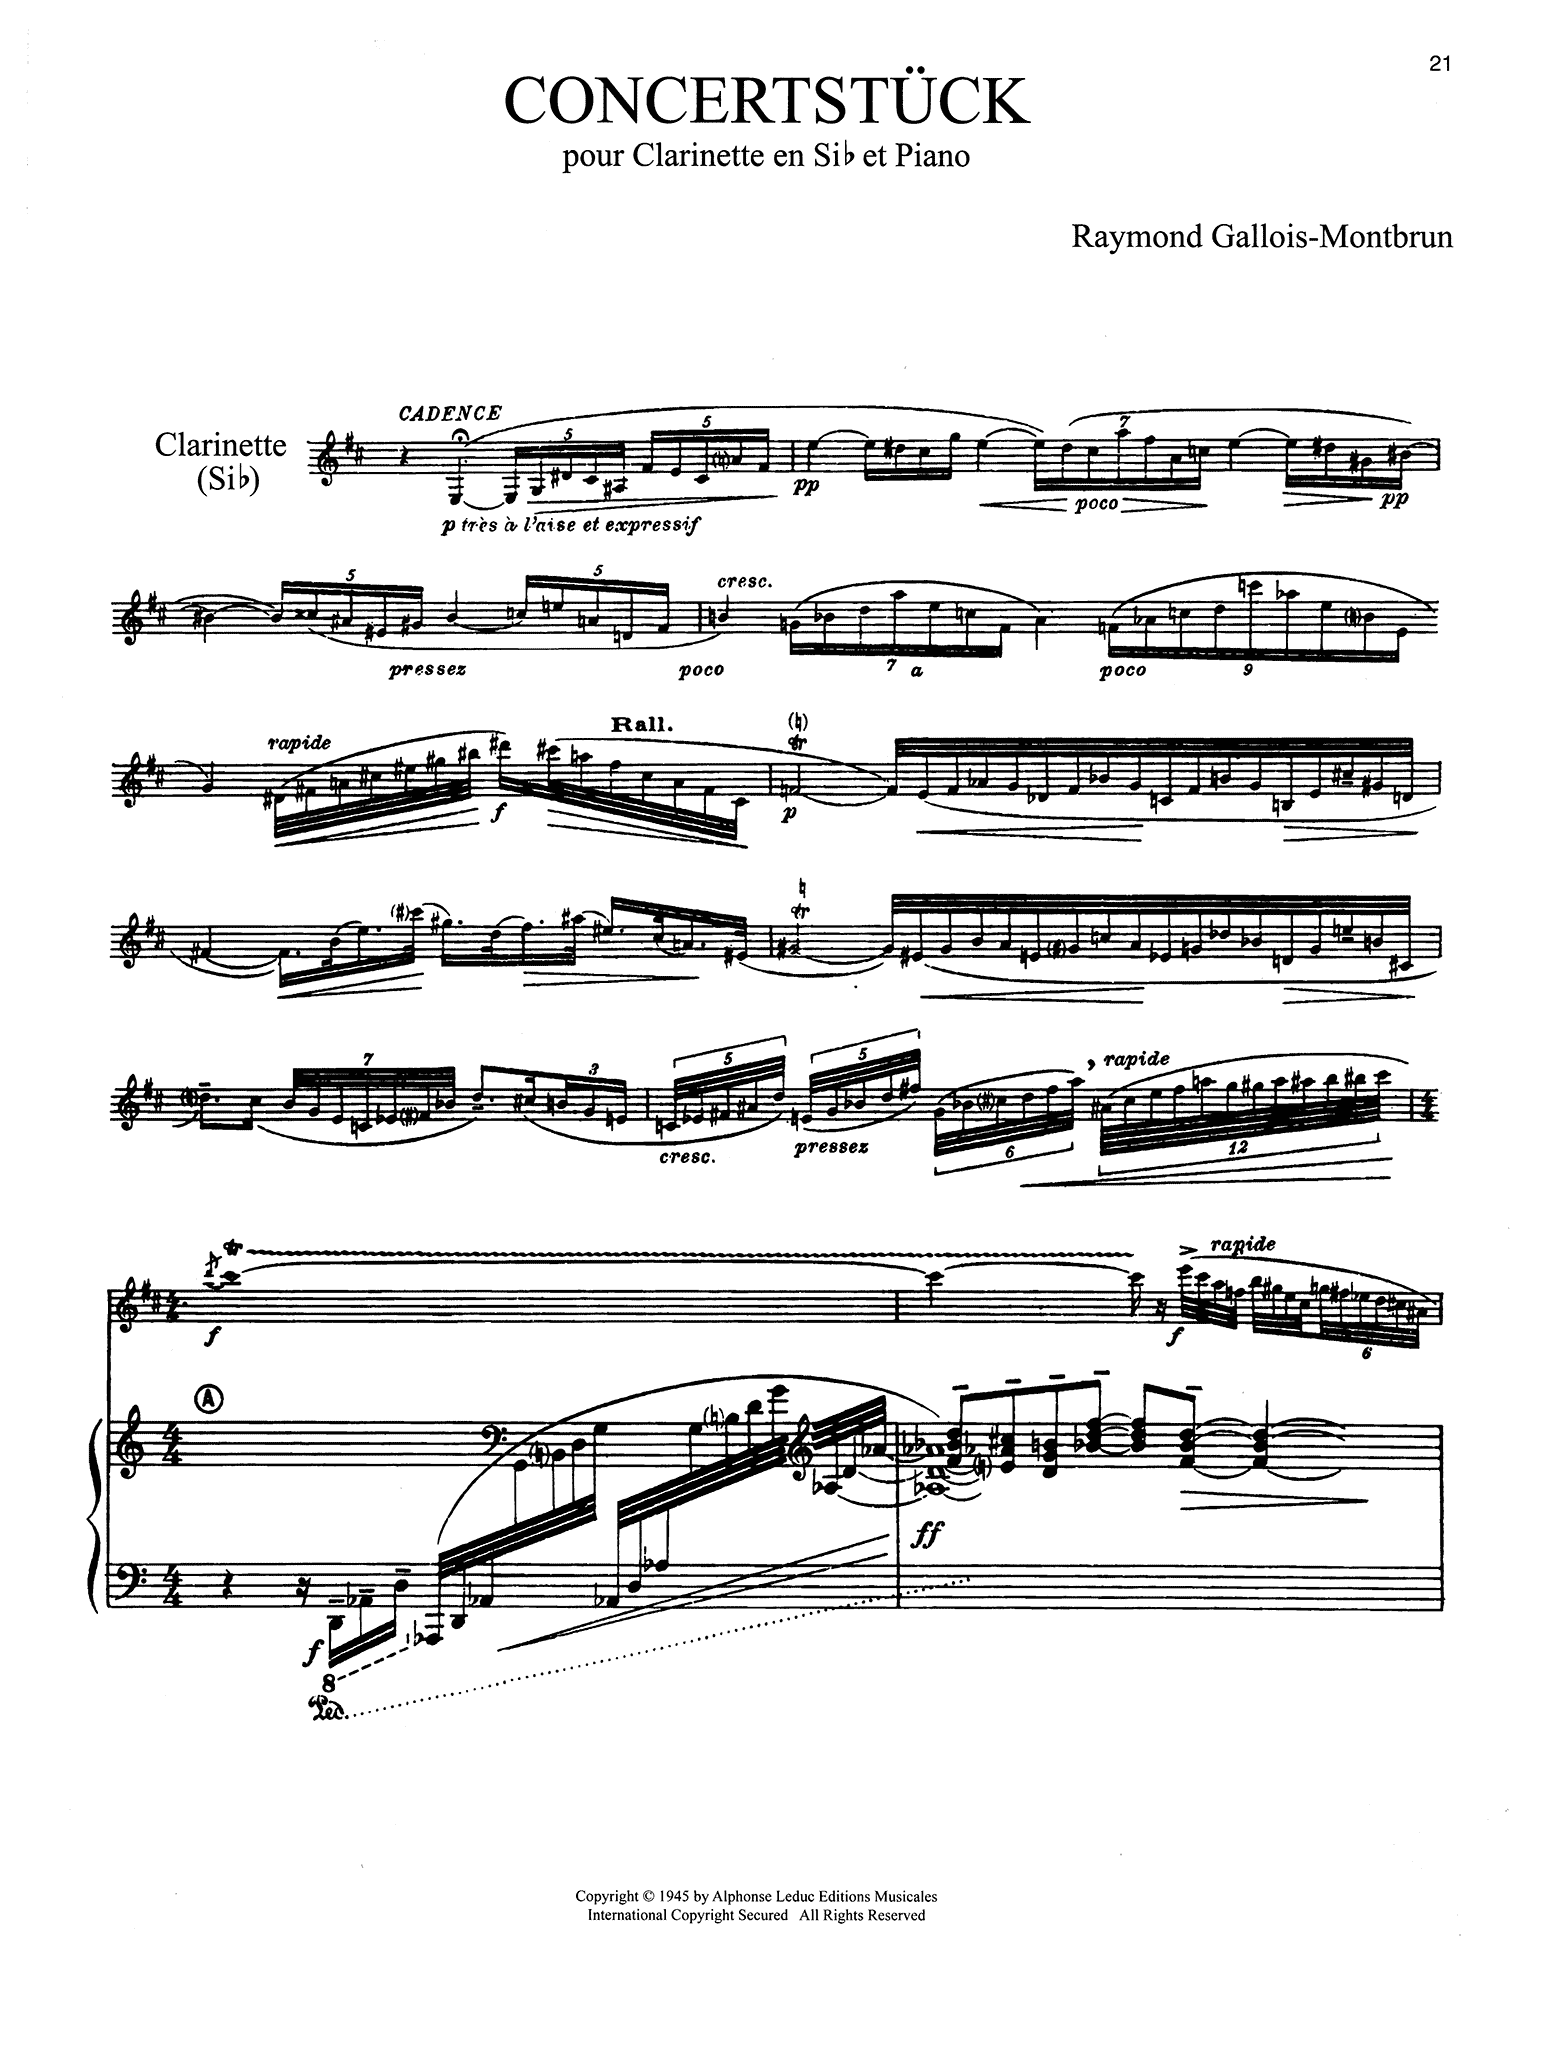 Gallois-Montbrun Concertstuck  Score